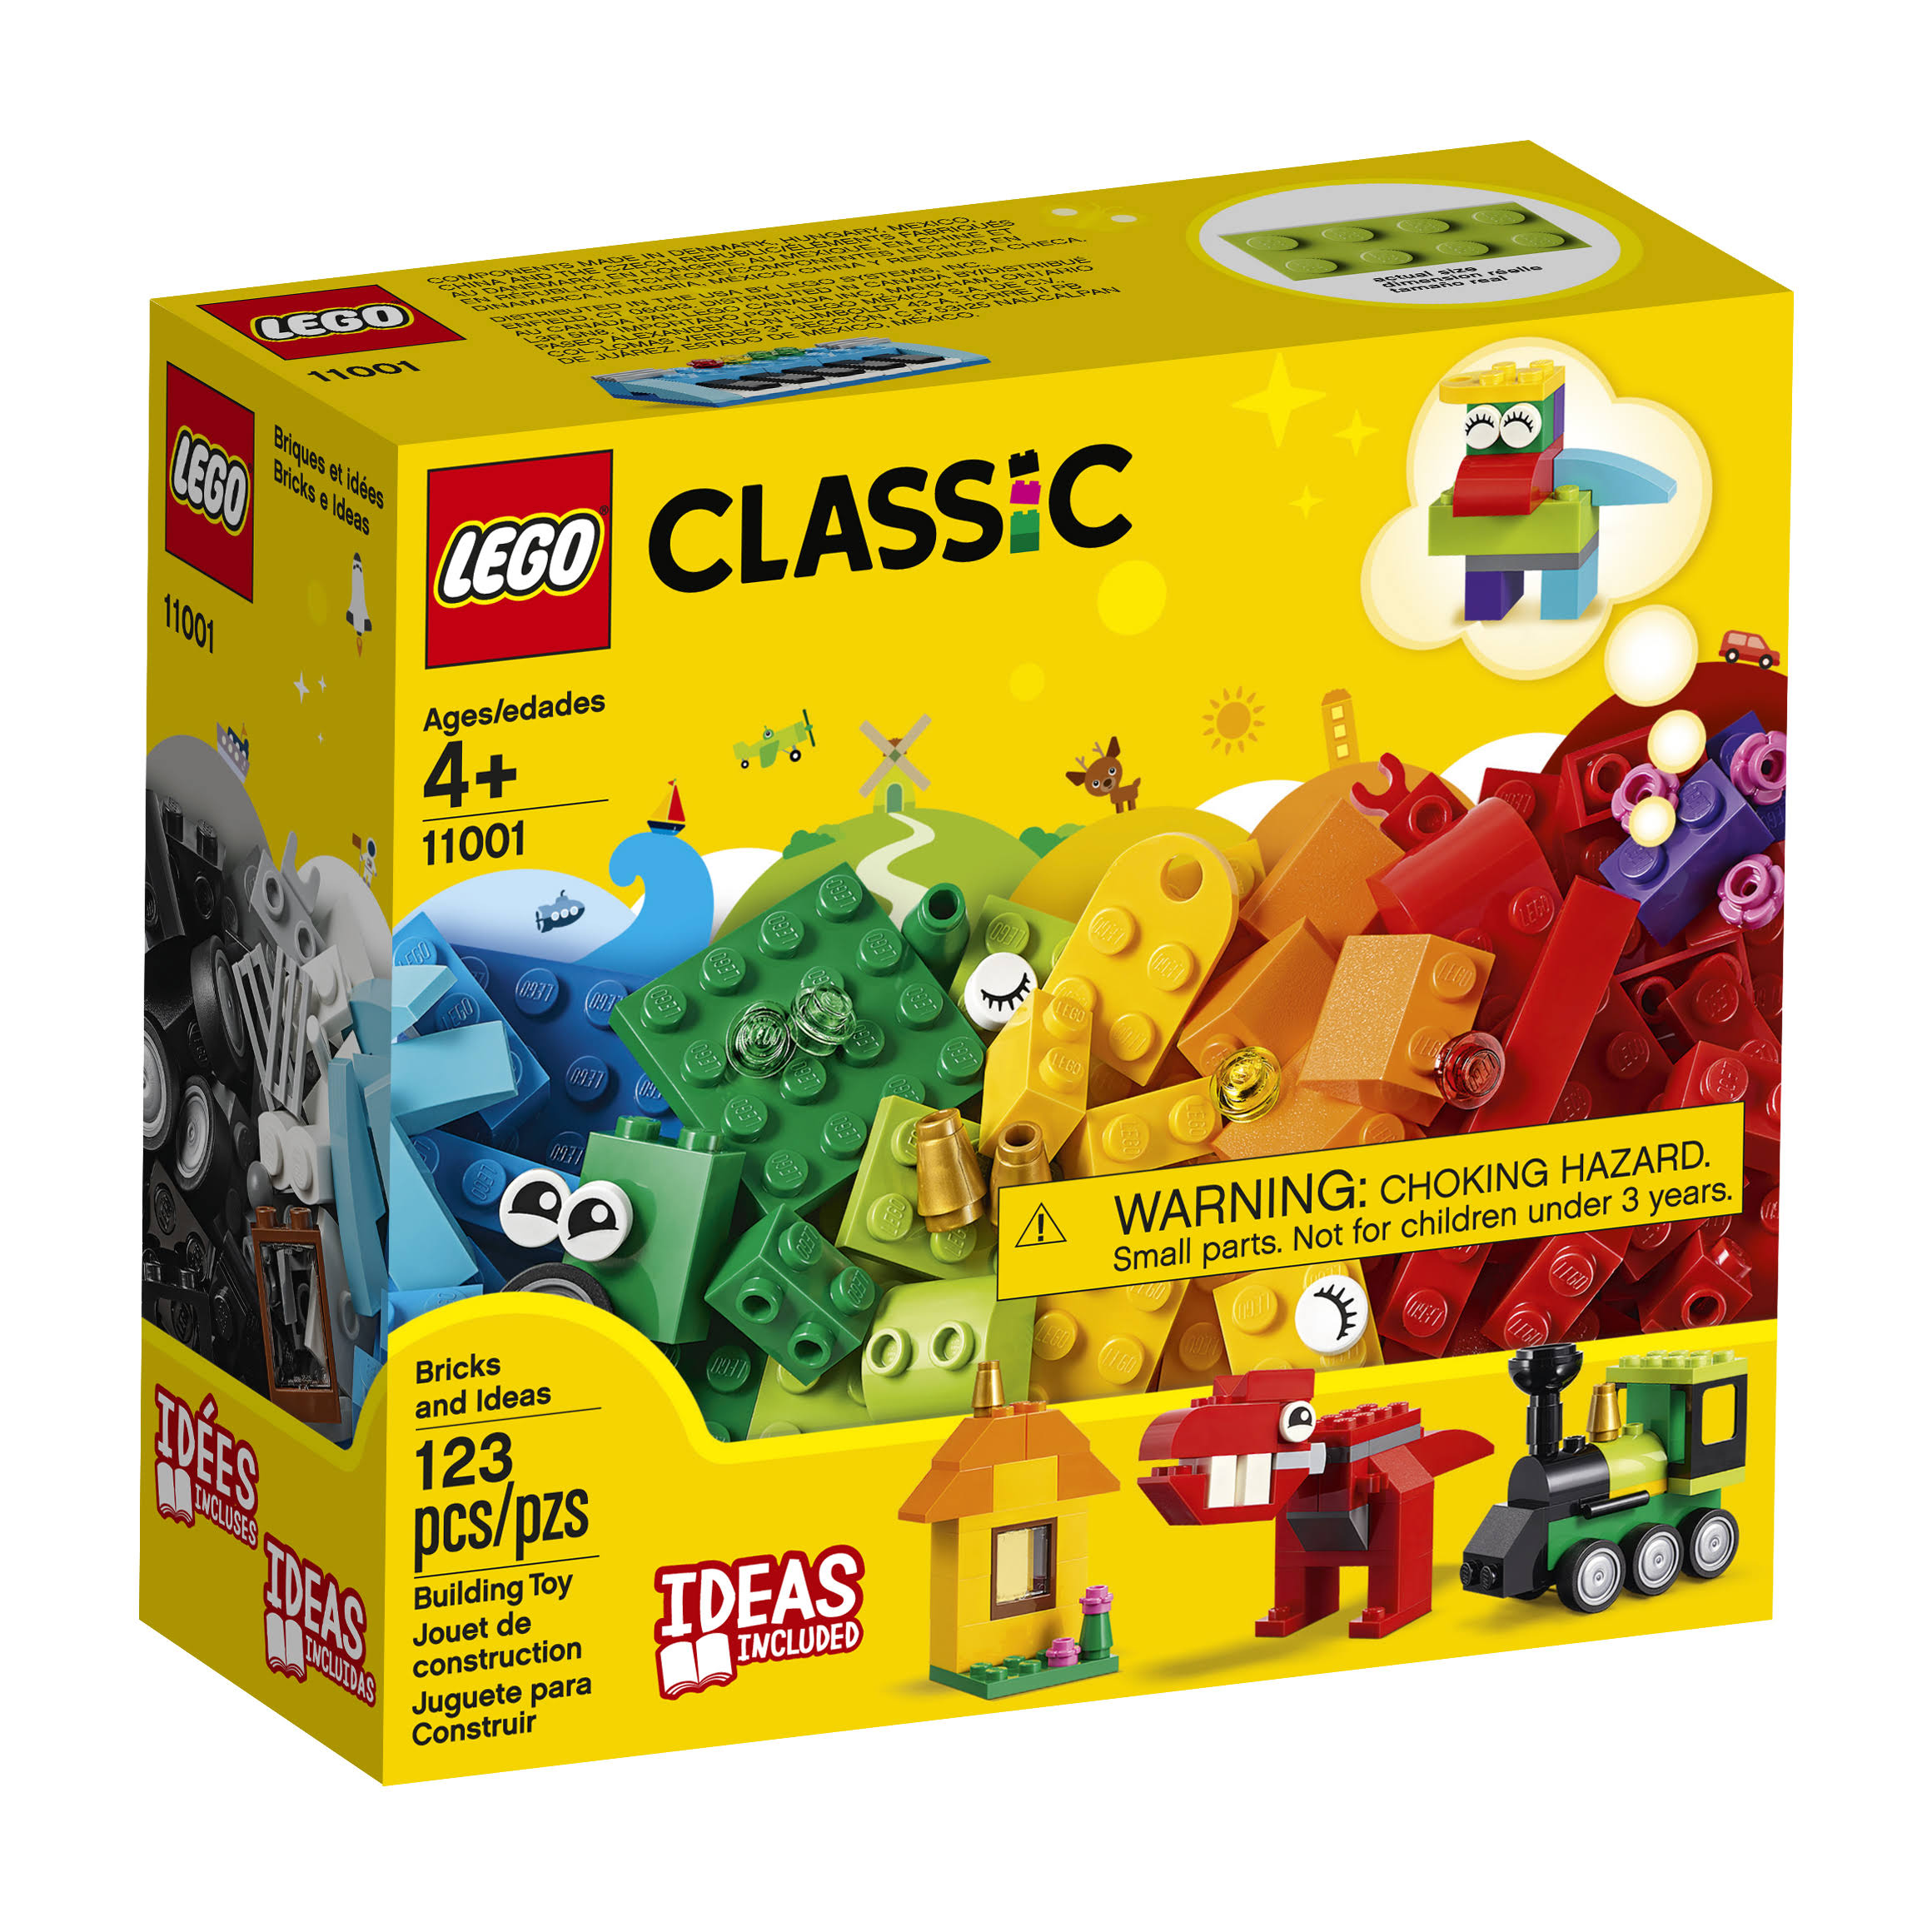 Lego Classic Building Toy, Bricks & Ideas